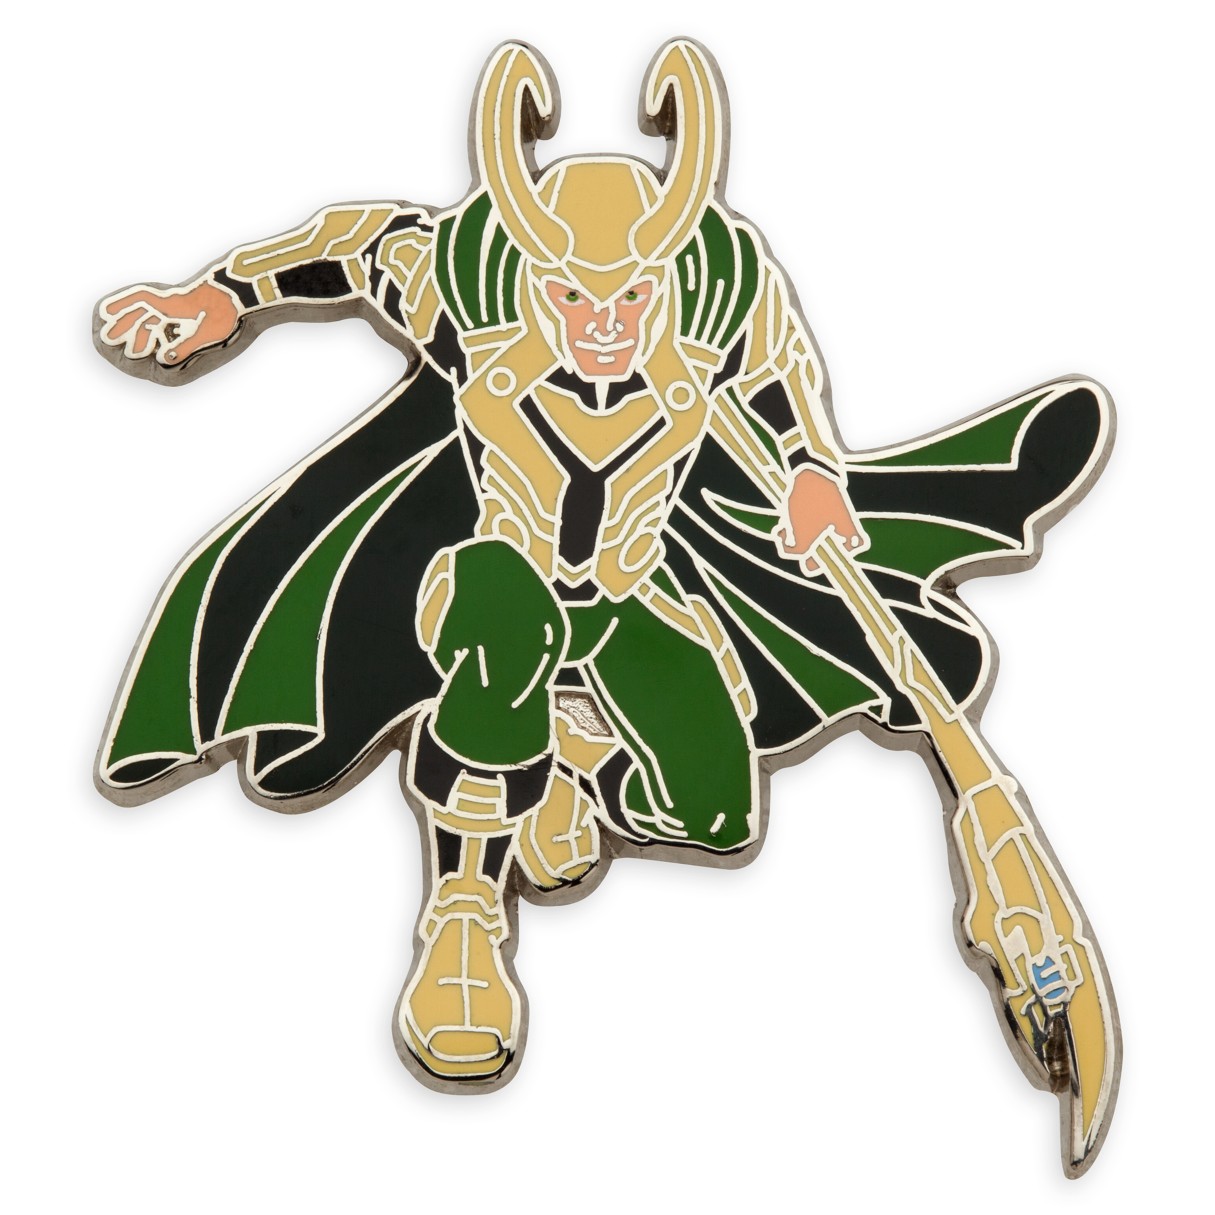 Loki Pin – The Avengers